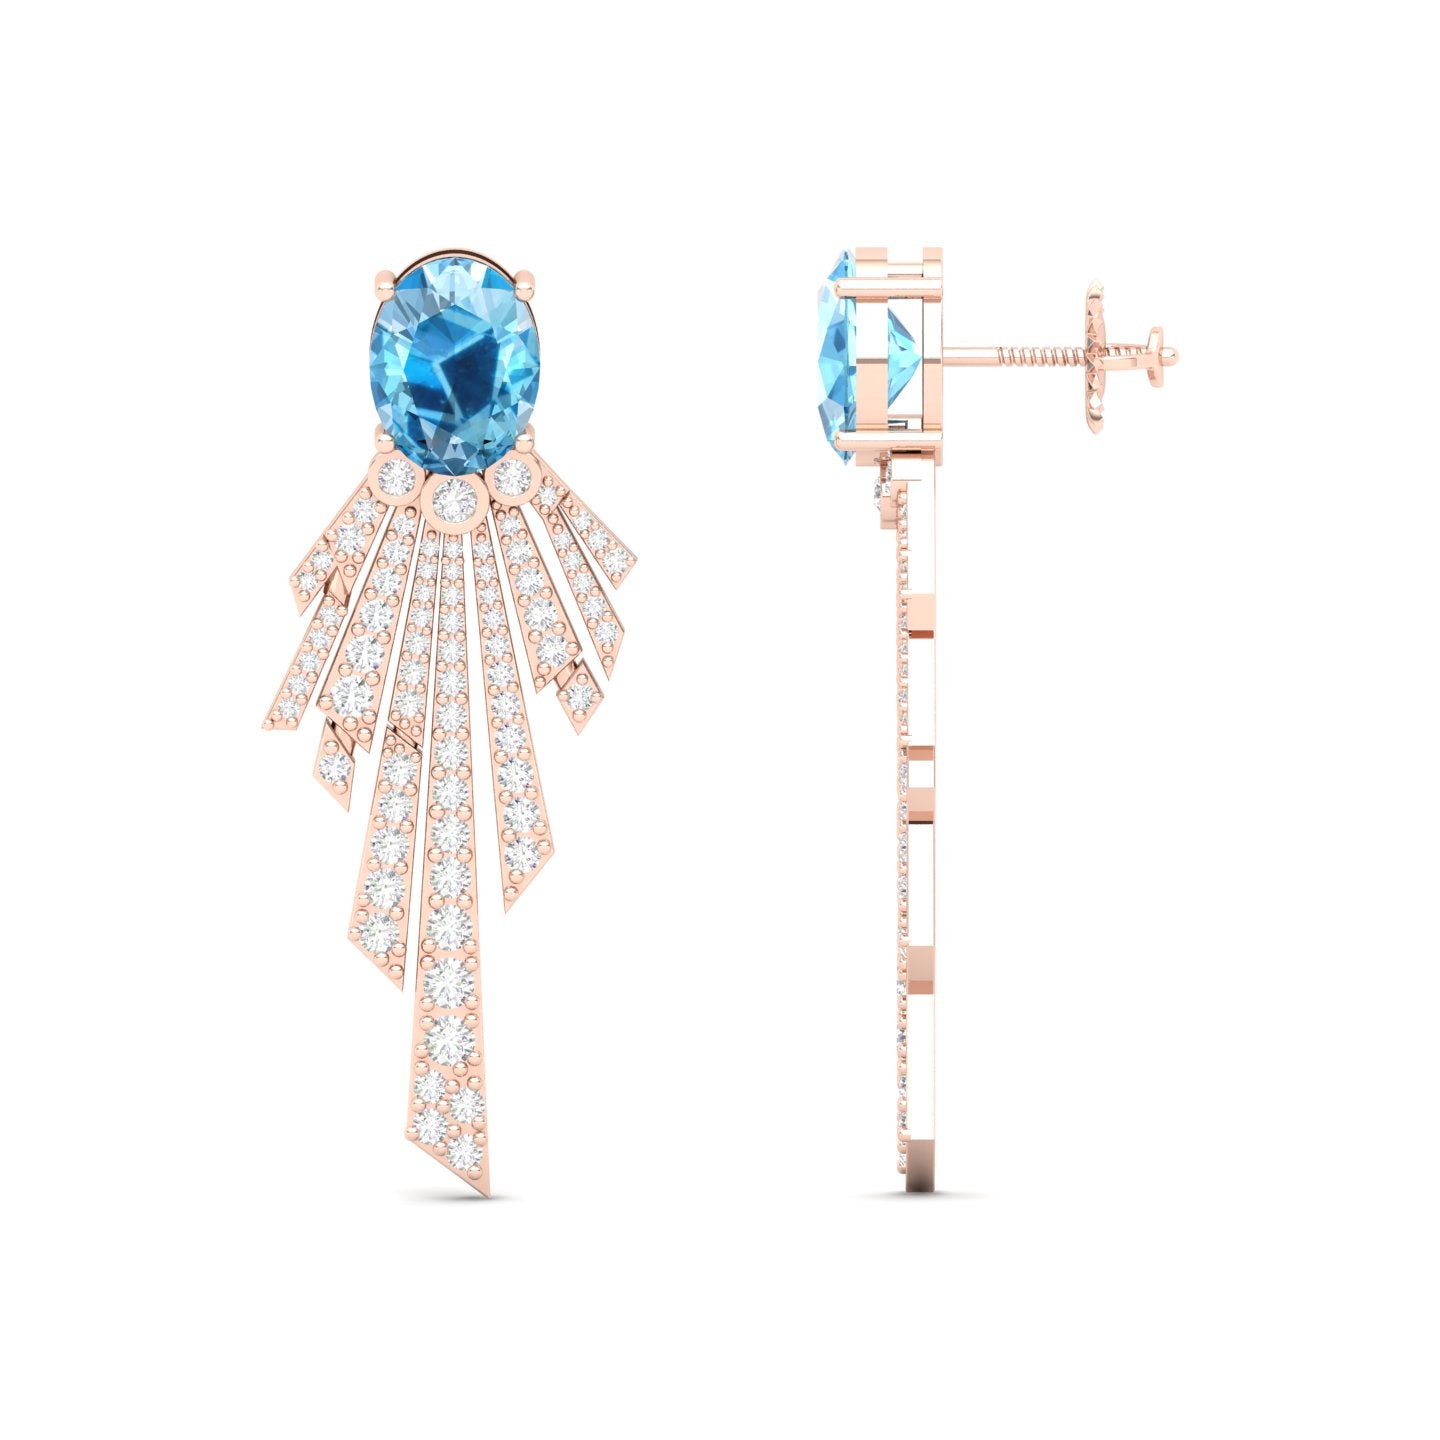 Maurya Blue Topaz Pyre Fashion Earrings with Pave Set Diamonds